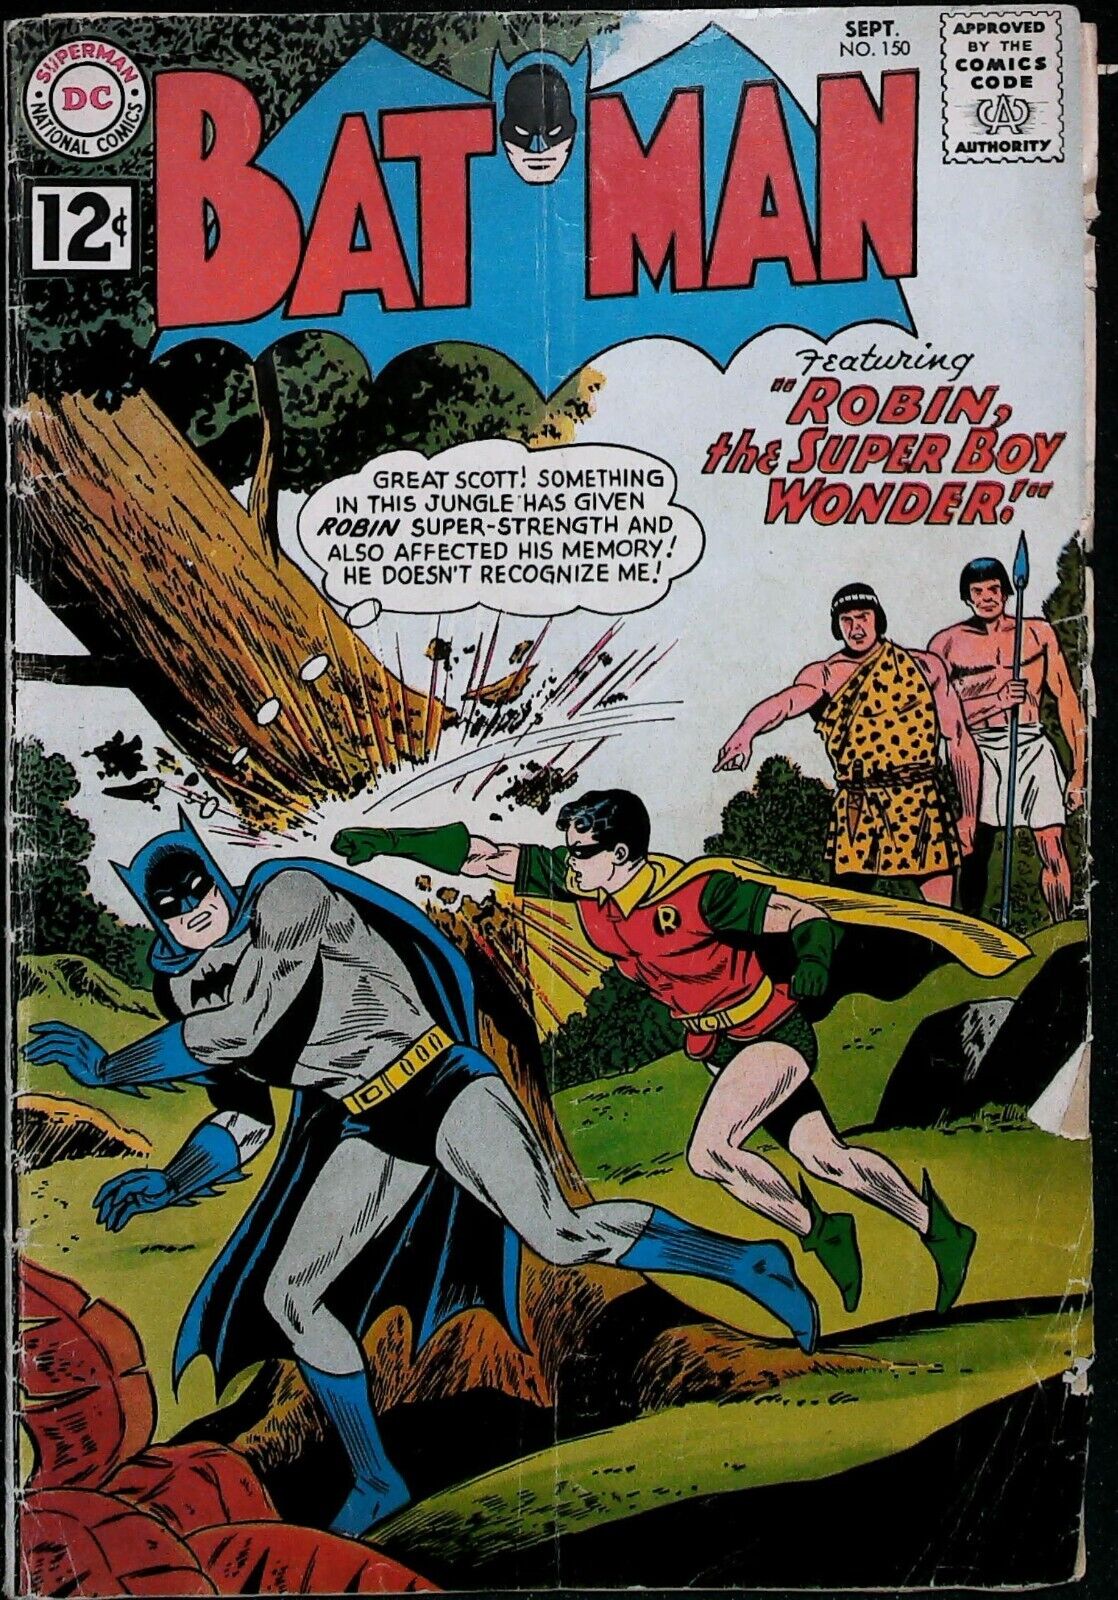 Batman #150 Vol 1 (1962) - DC - 150th Issue - Low Grade - Centerfold Detached